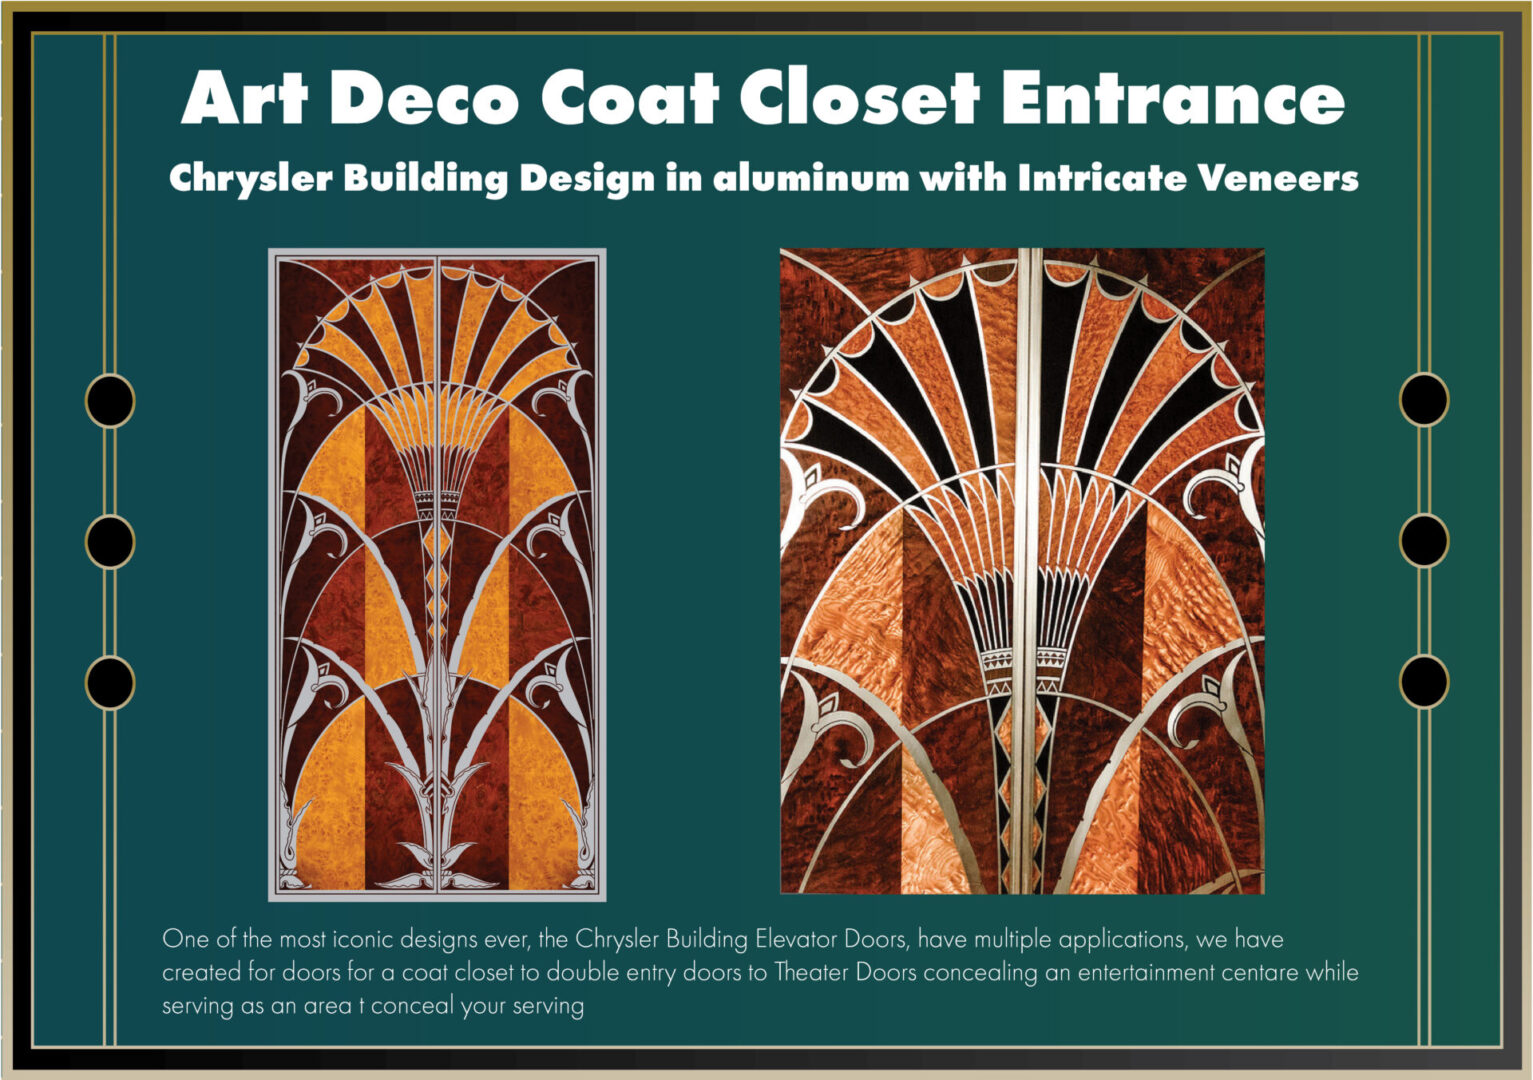 Chrysler Building Design Art Deco Coat Closet Entrance